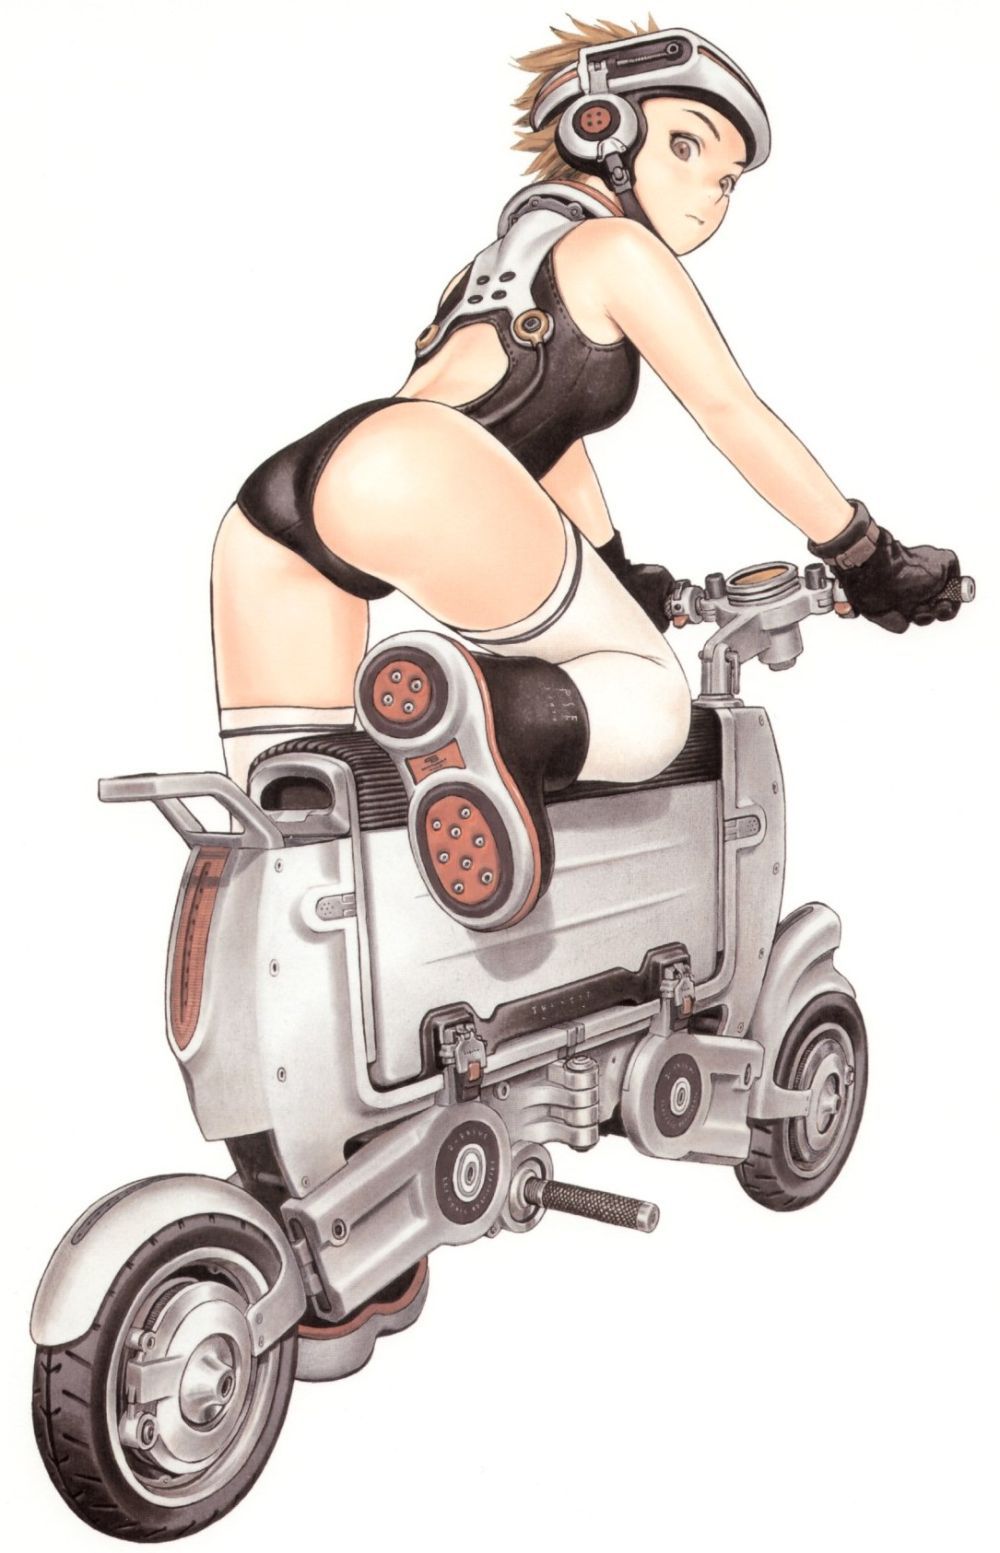 [Secondary] 可愛kattari, sometimes to cool girls riding bikes pictures 25